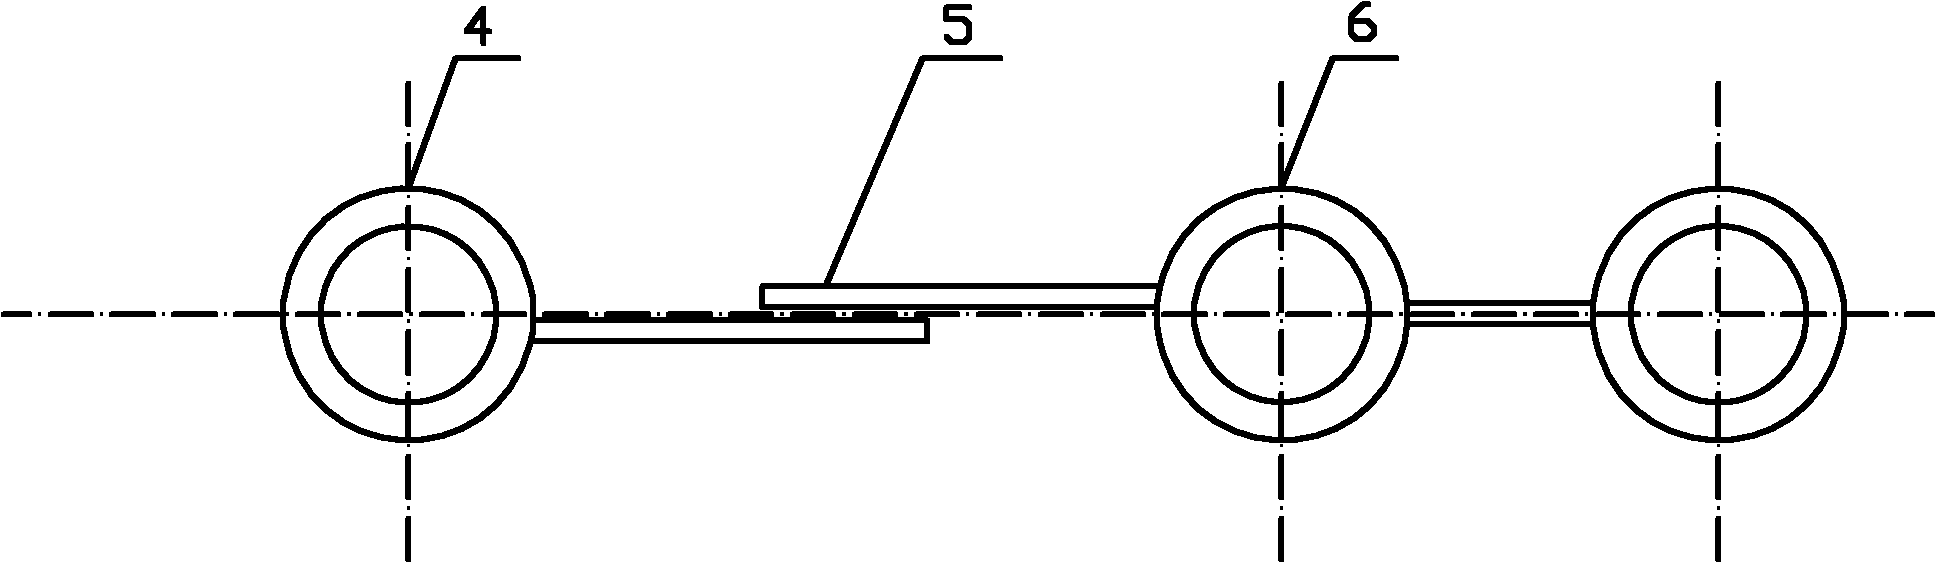 Horizontal boiler radiation segment structure